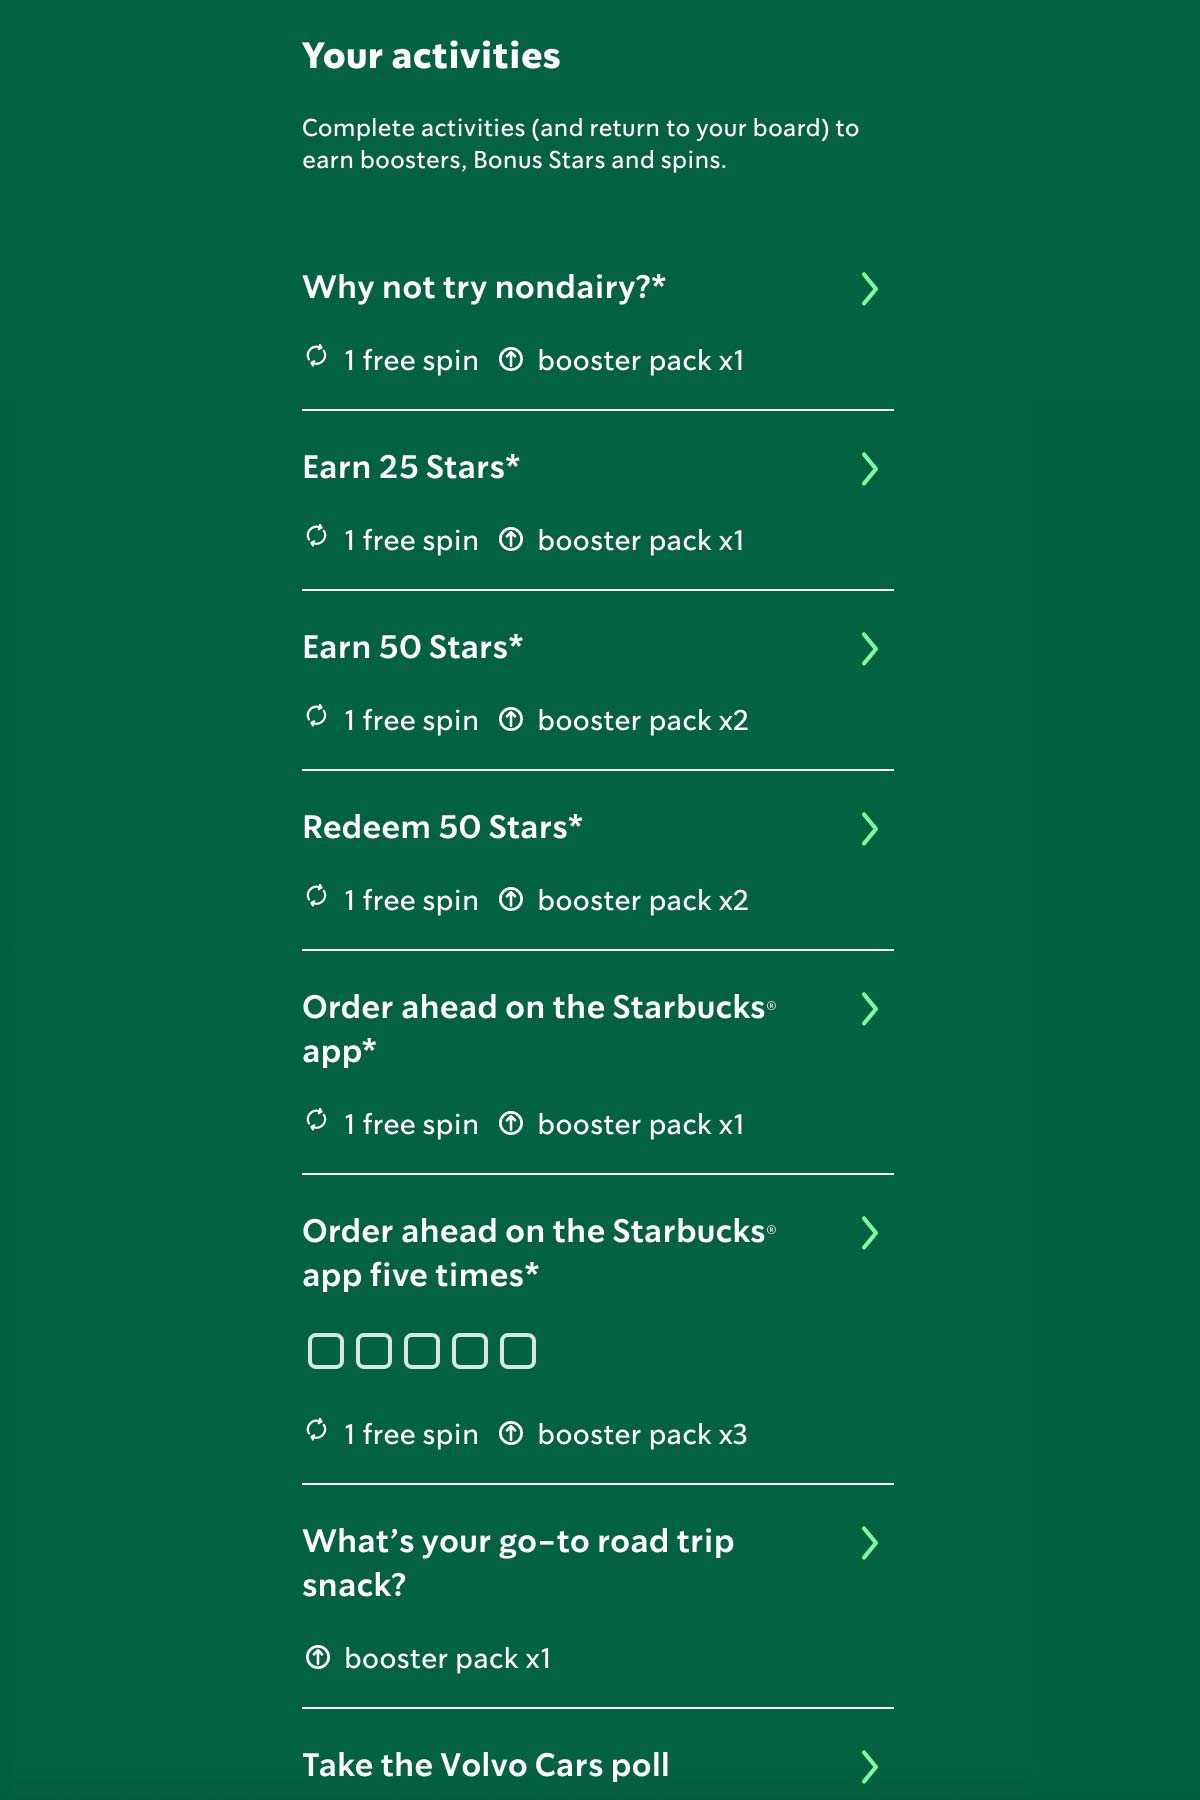 Starbucks Summer Game 2022 activities text on green background.